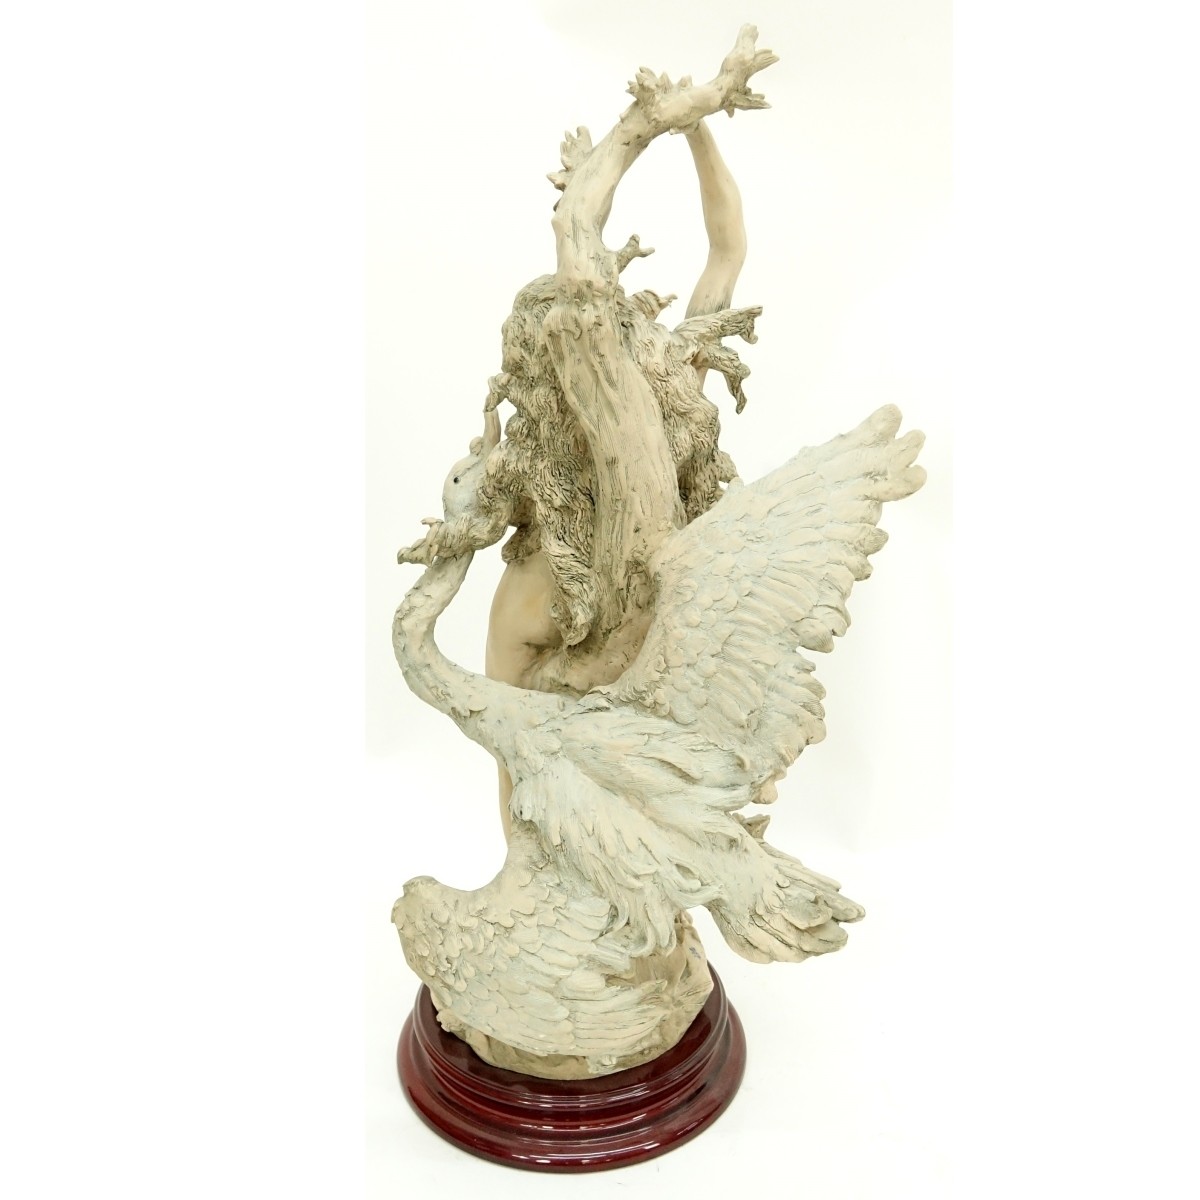 Giuseppe Armani "Leda And Swan" Figurine